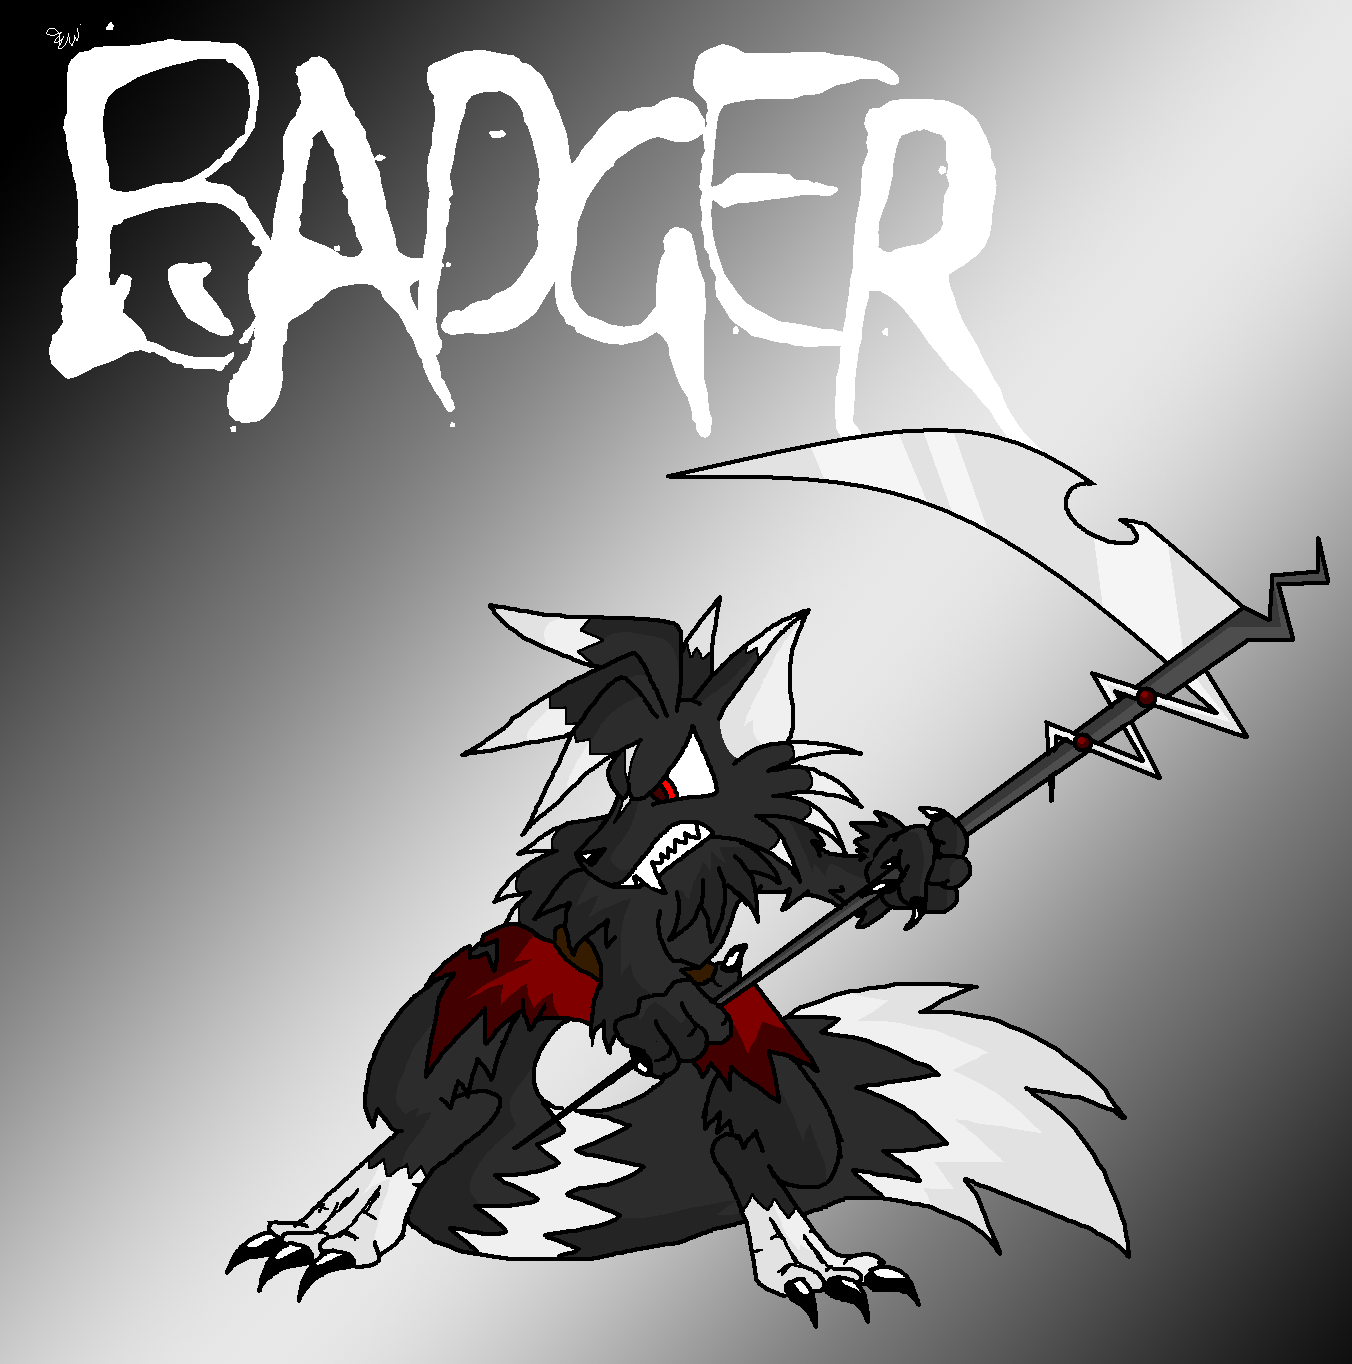 Werewolf Badger by Edge14